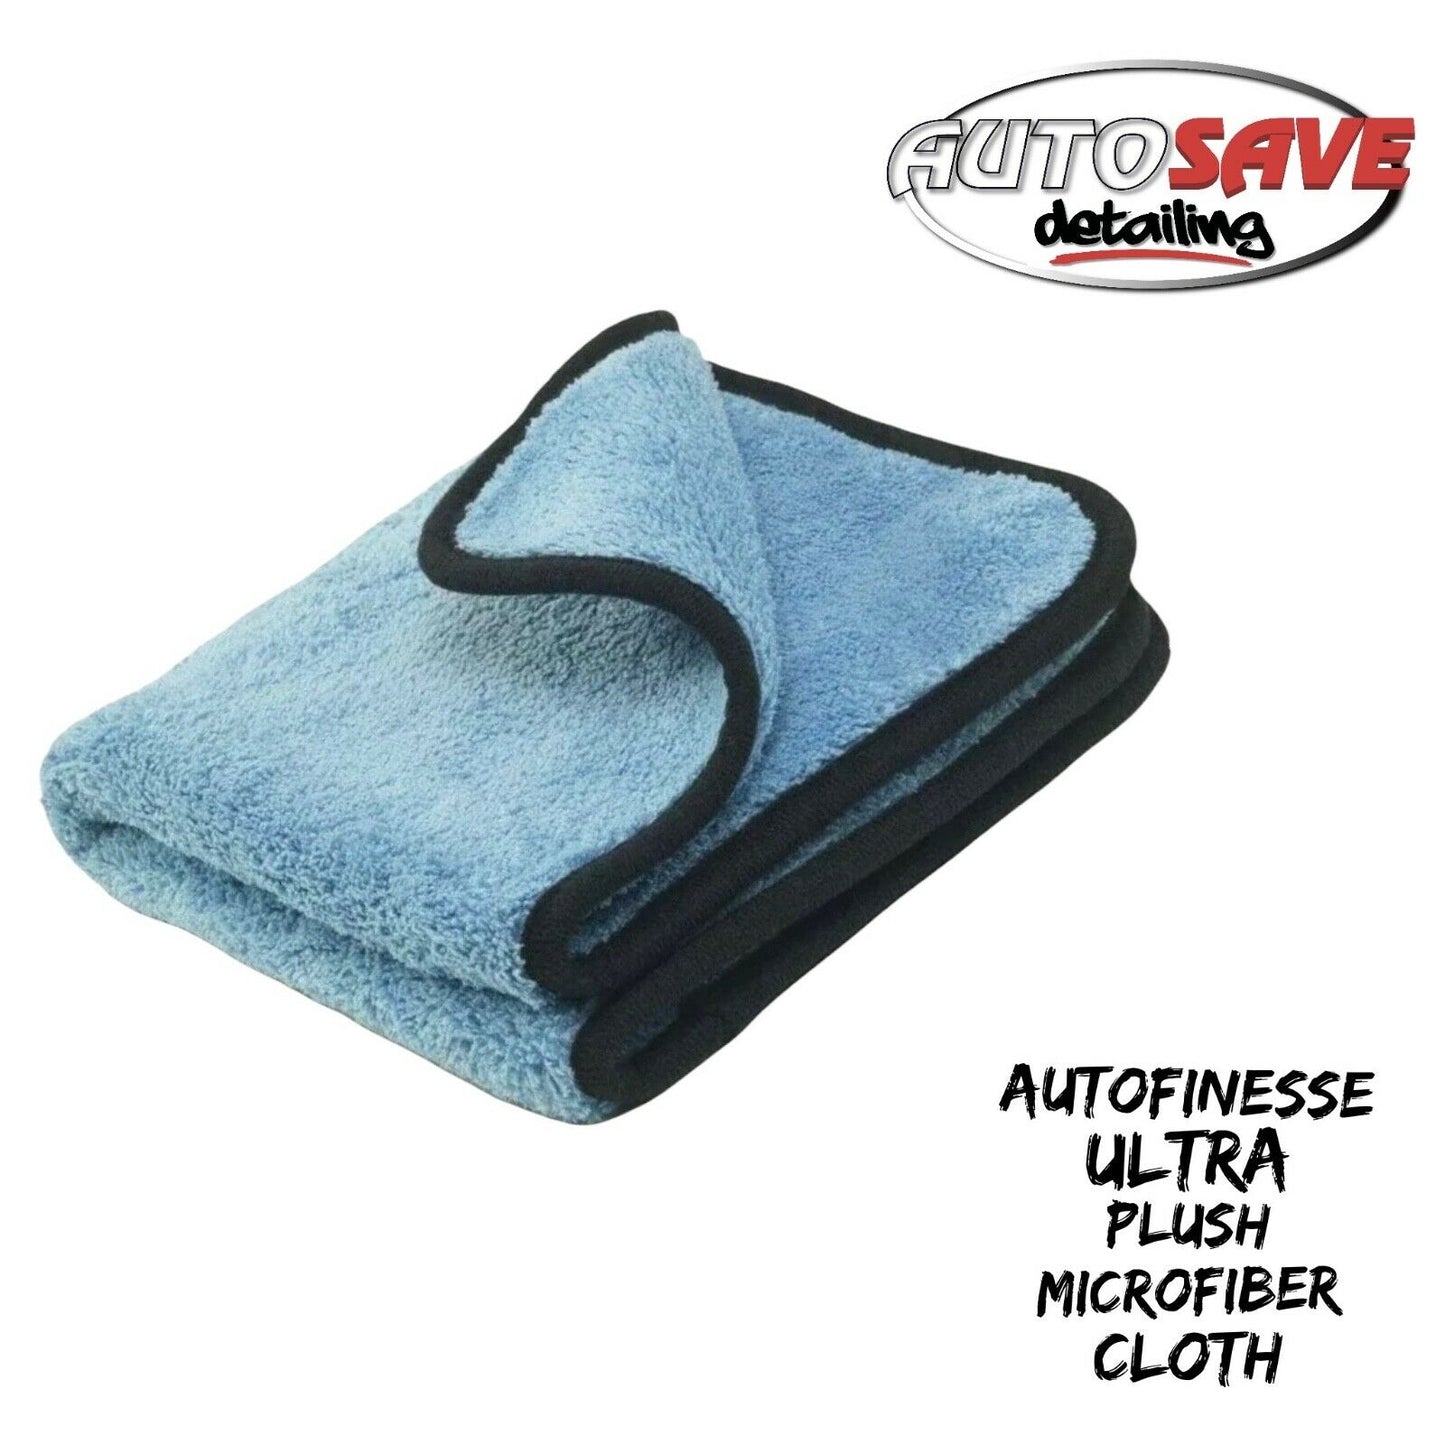 AUTO FINESSE ULTRA PLUSH MICROFIBRE CLOTH TOWEL SHOW CAR VAN CLEANER DETAILING